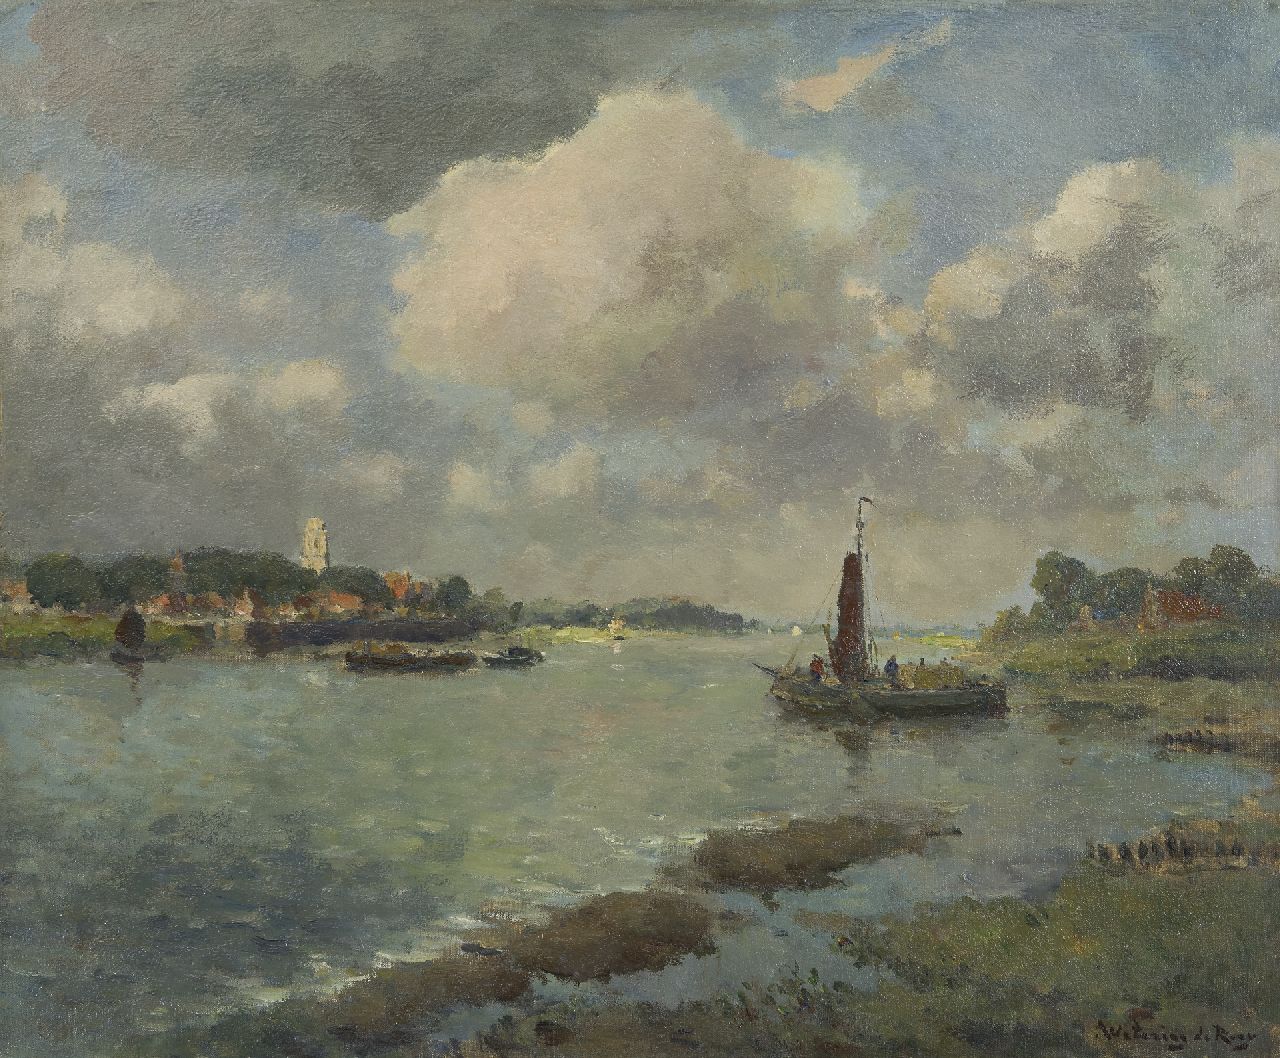 Johannes Embrosius van de Wetering de Rooij | The river Waal near Zaltbommel, oil on canvas, 50.3 x 60.1 cm, signed l.r.